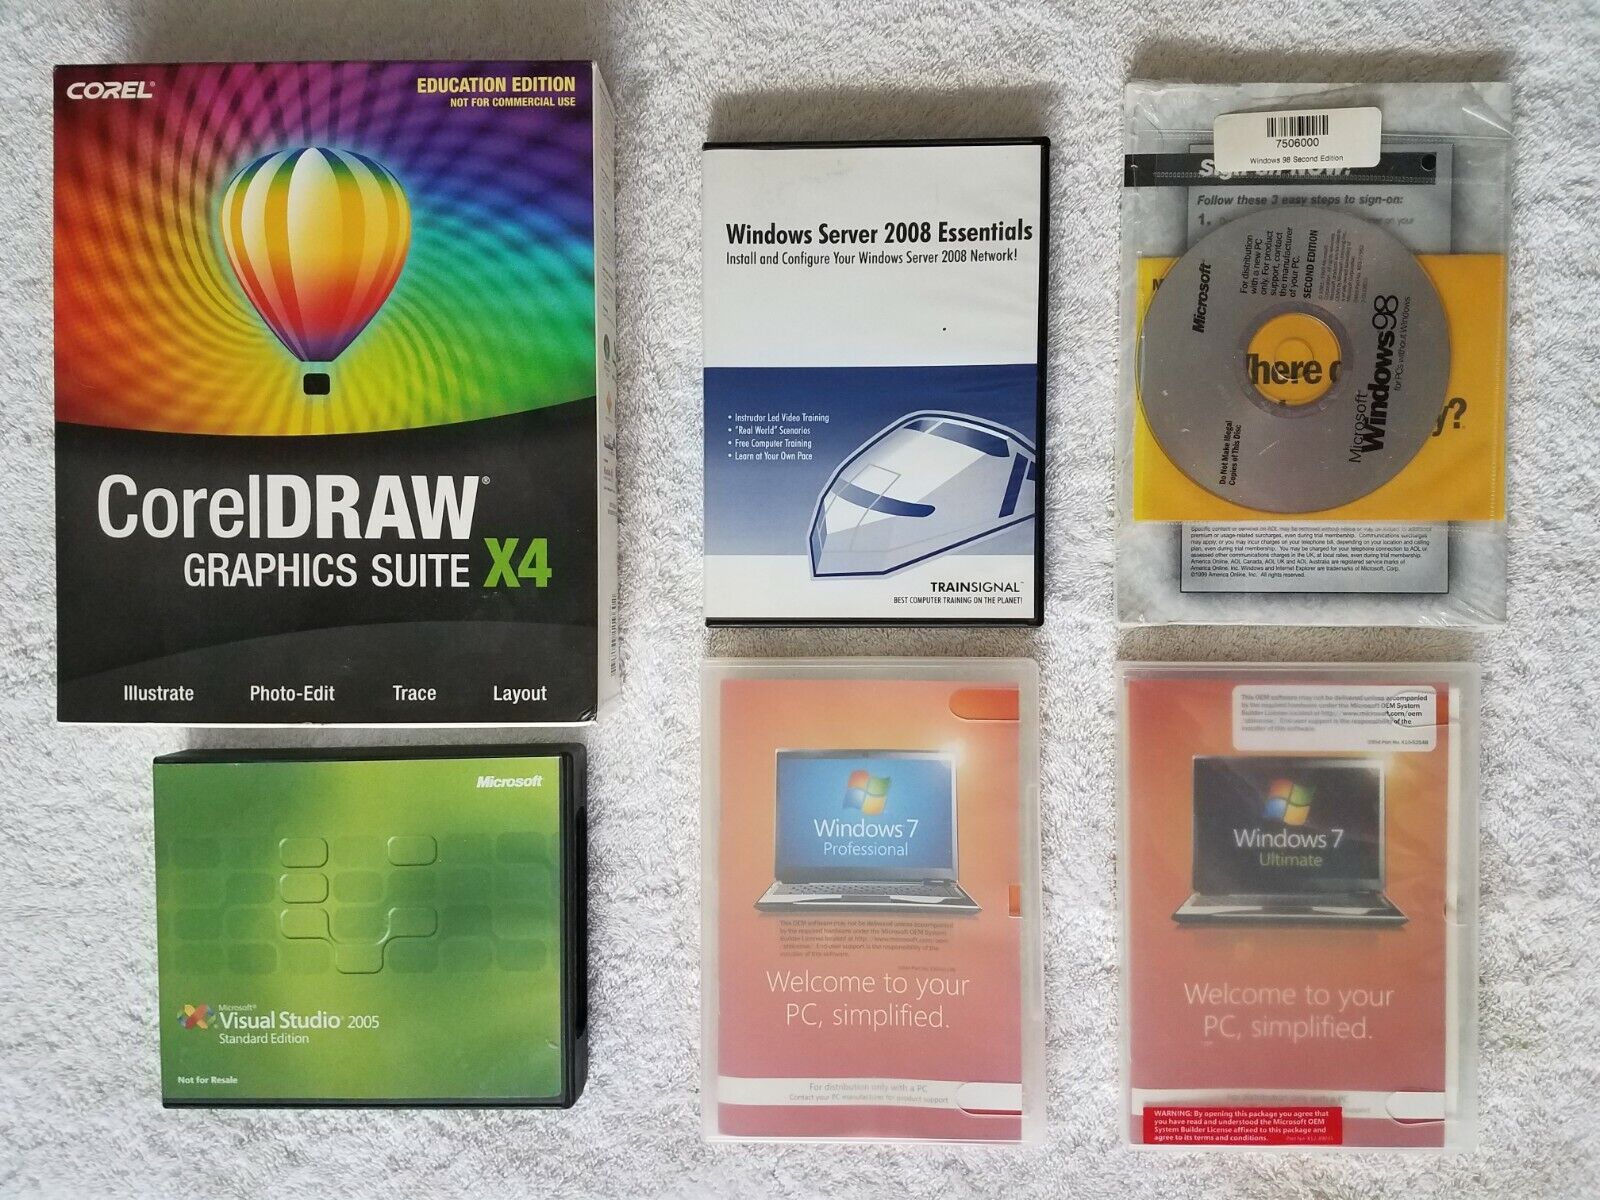 WIndows 7 (Pro64), WIndows 7 (Ult32), Windows 98SE, VS 2005 Std, TrainSignal 2k8